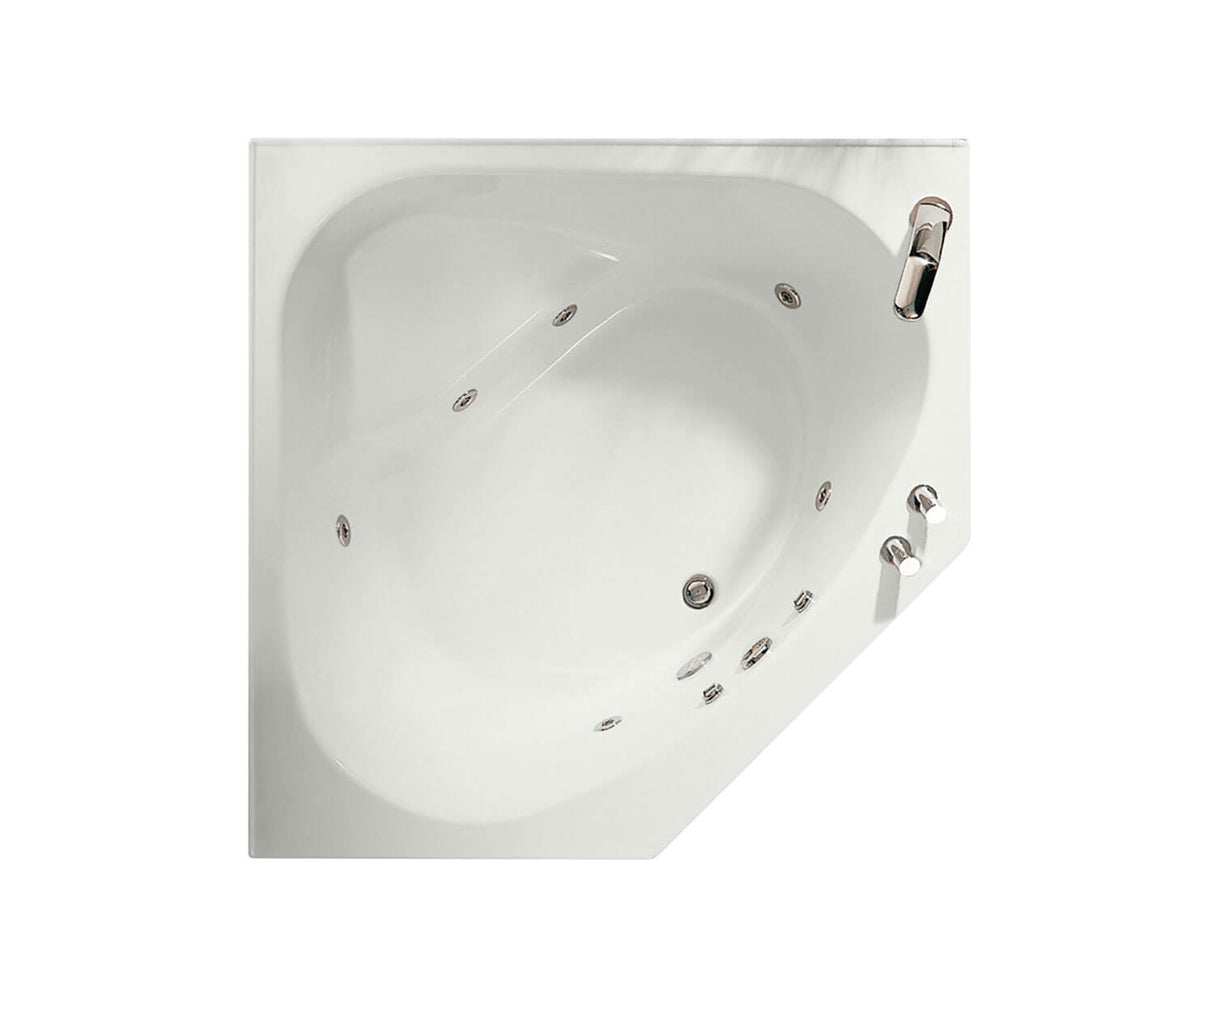 MAAX 100054-103-001-100 Tandem II 6060 Acrylic Corner Center Drain Aeroeffect Bathtub in White